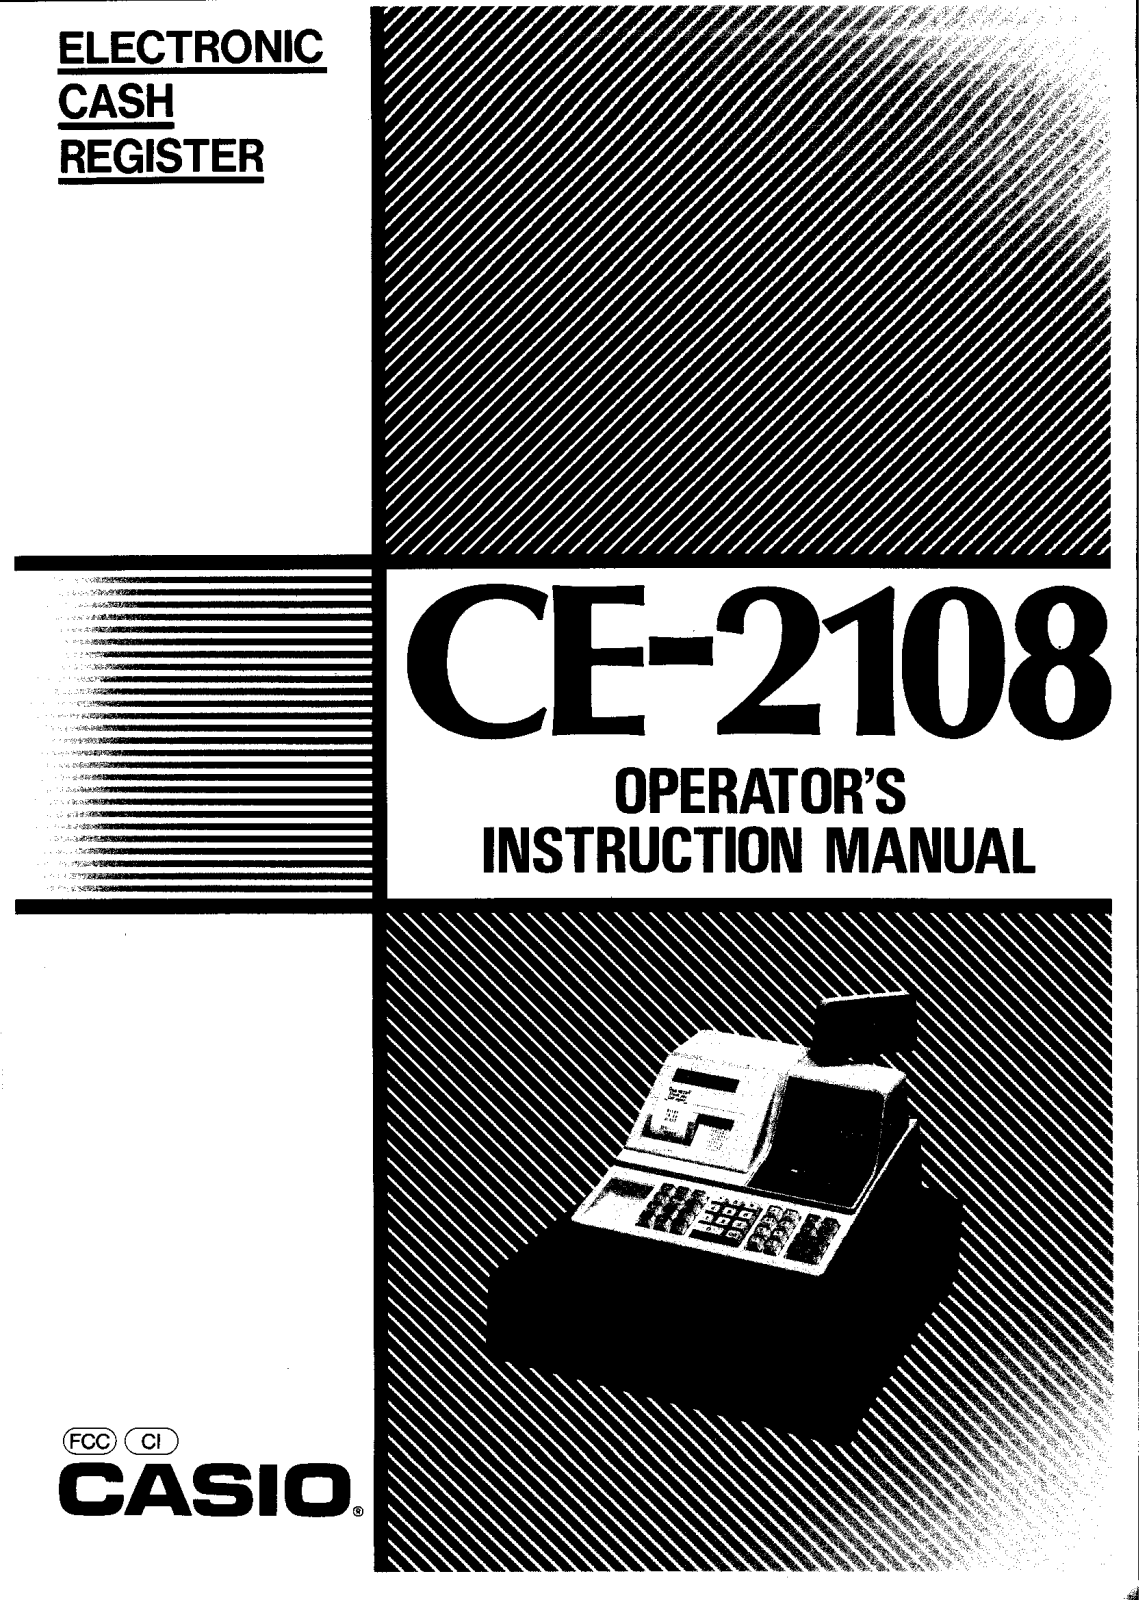 Casio CE-2108 Owner's Manual